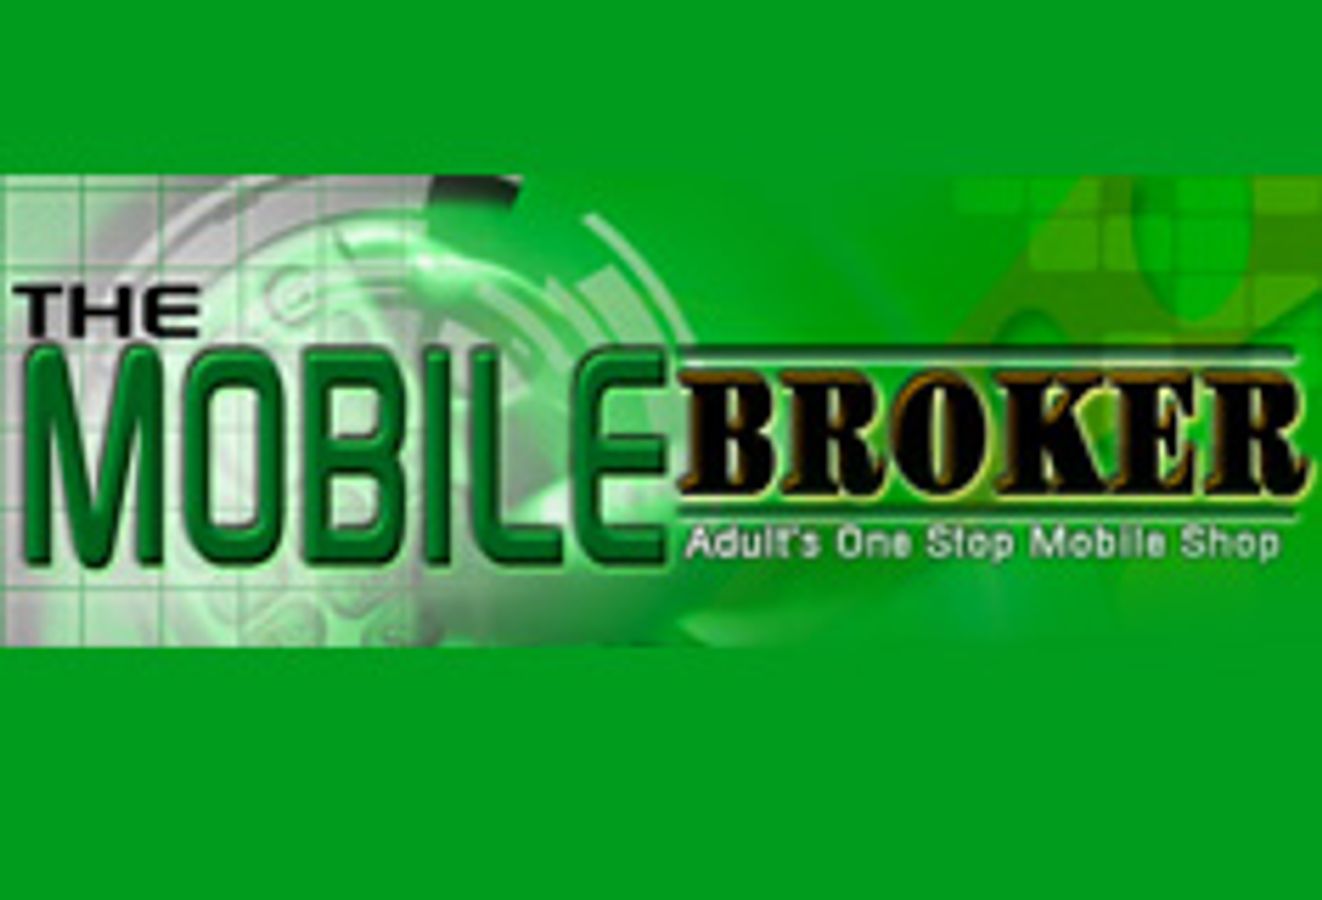 The Mobile Broker